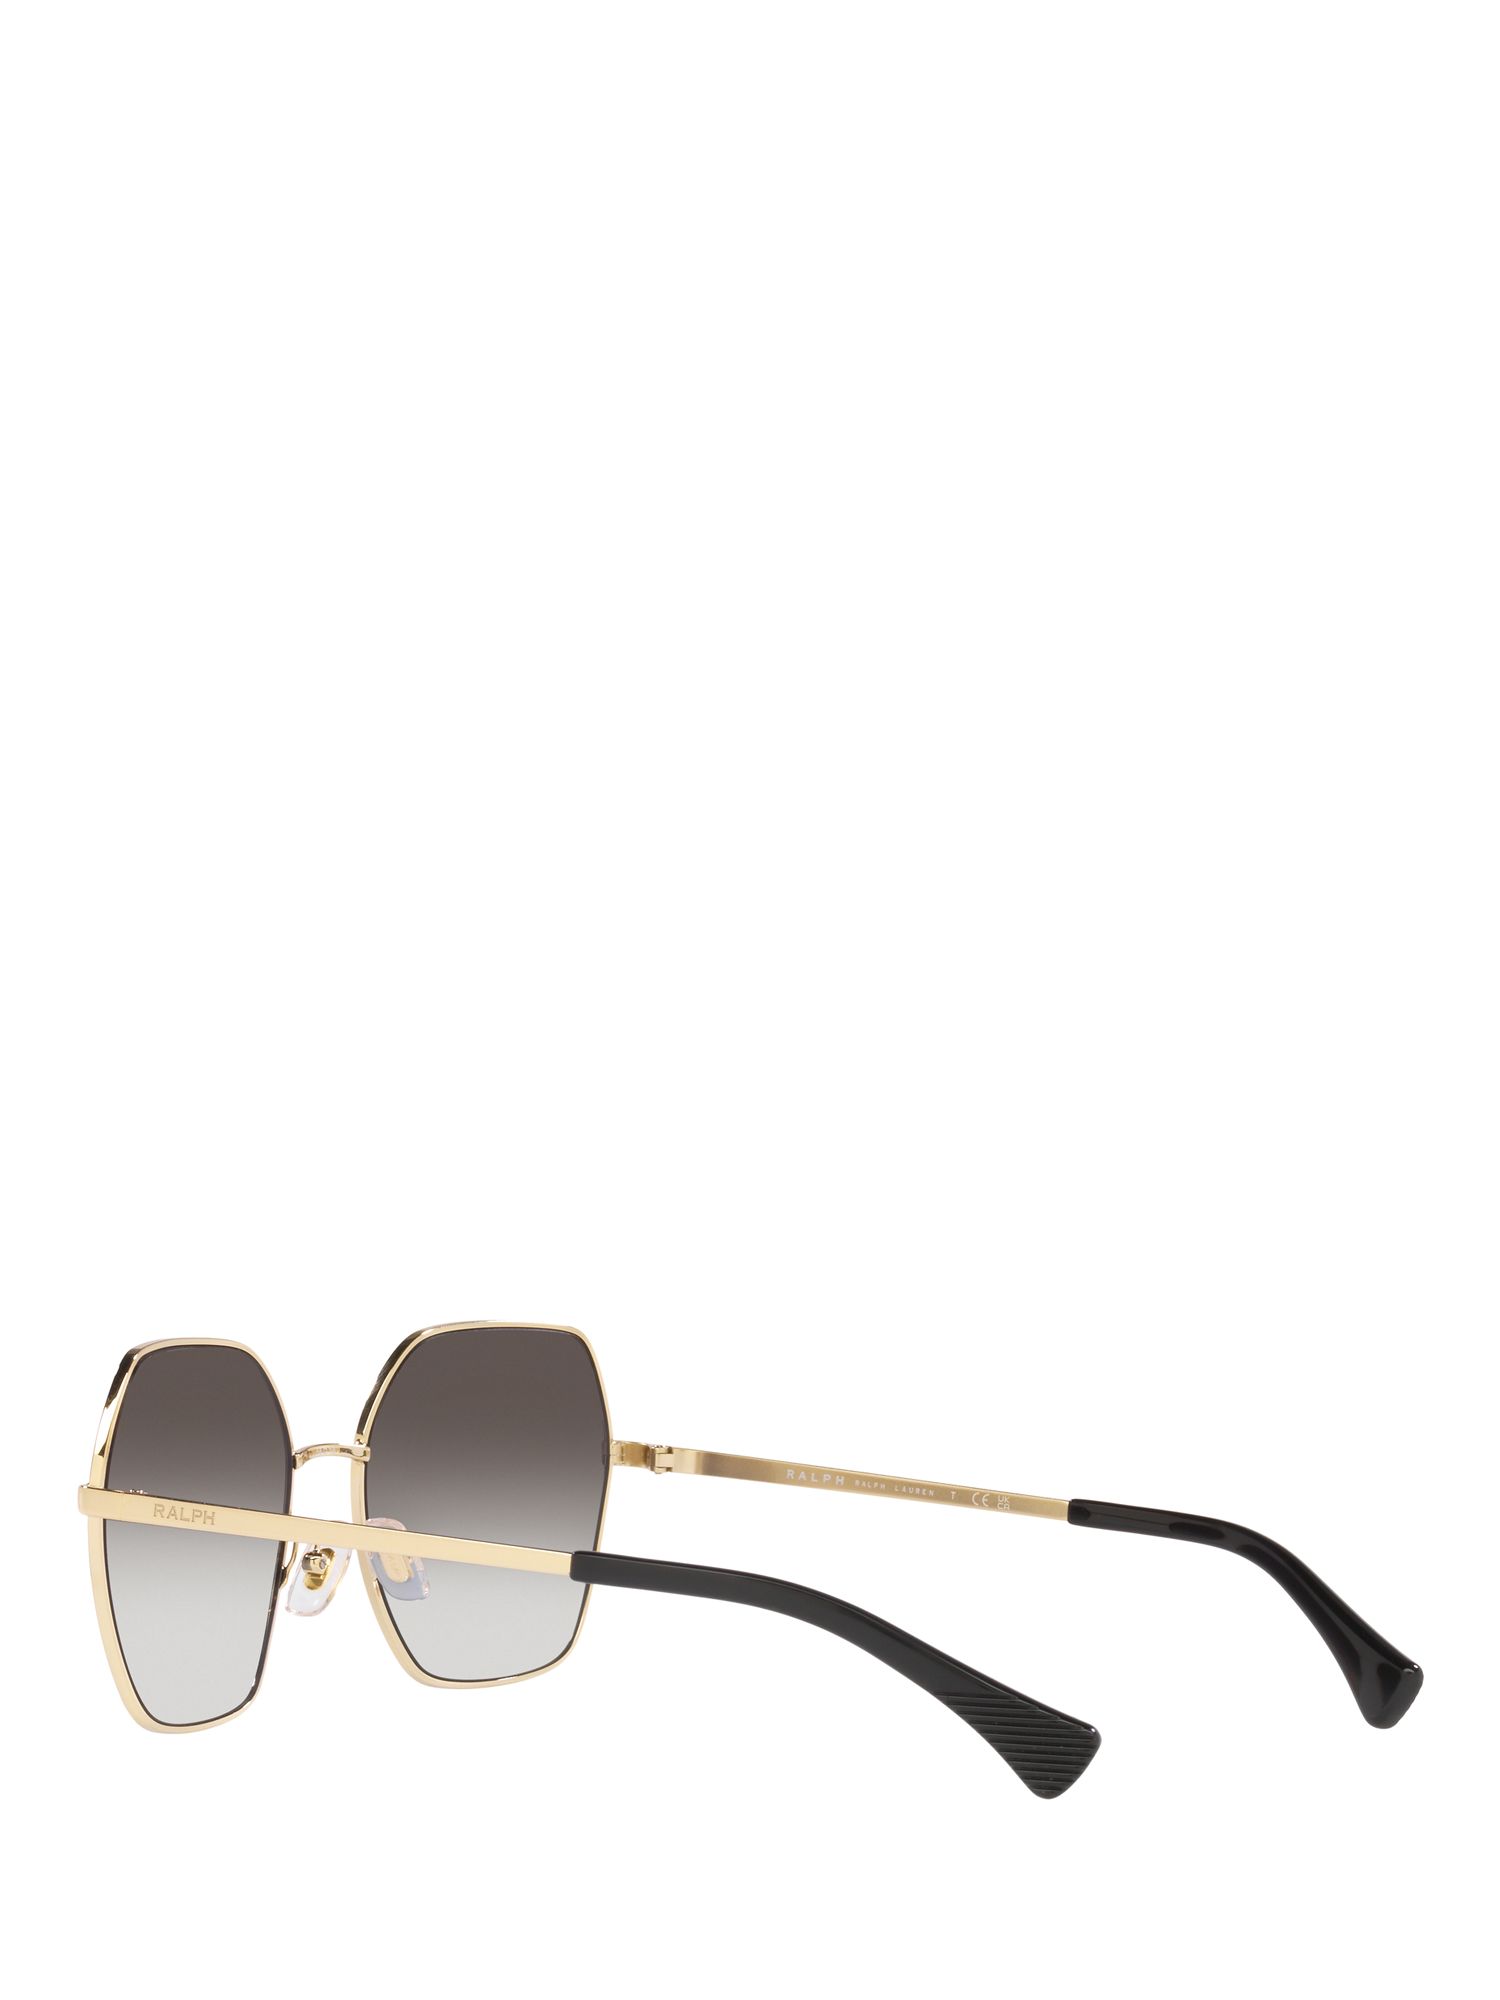 Buy Ralph RA4138 Women's Square Sunglasses, Pale Gold/Grey Gradient Online at johnlewis.com